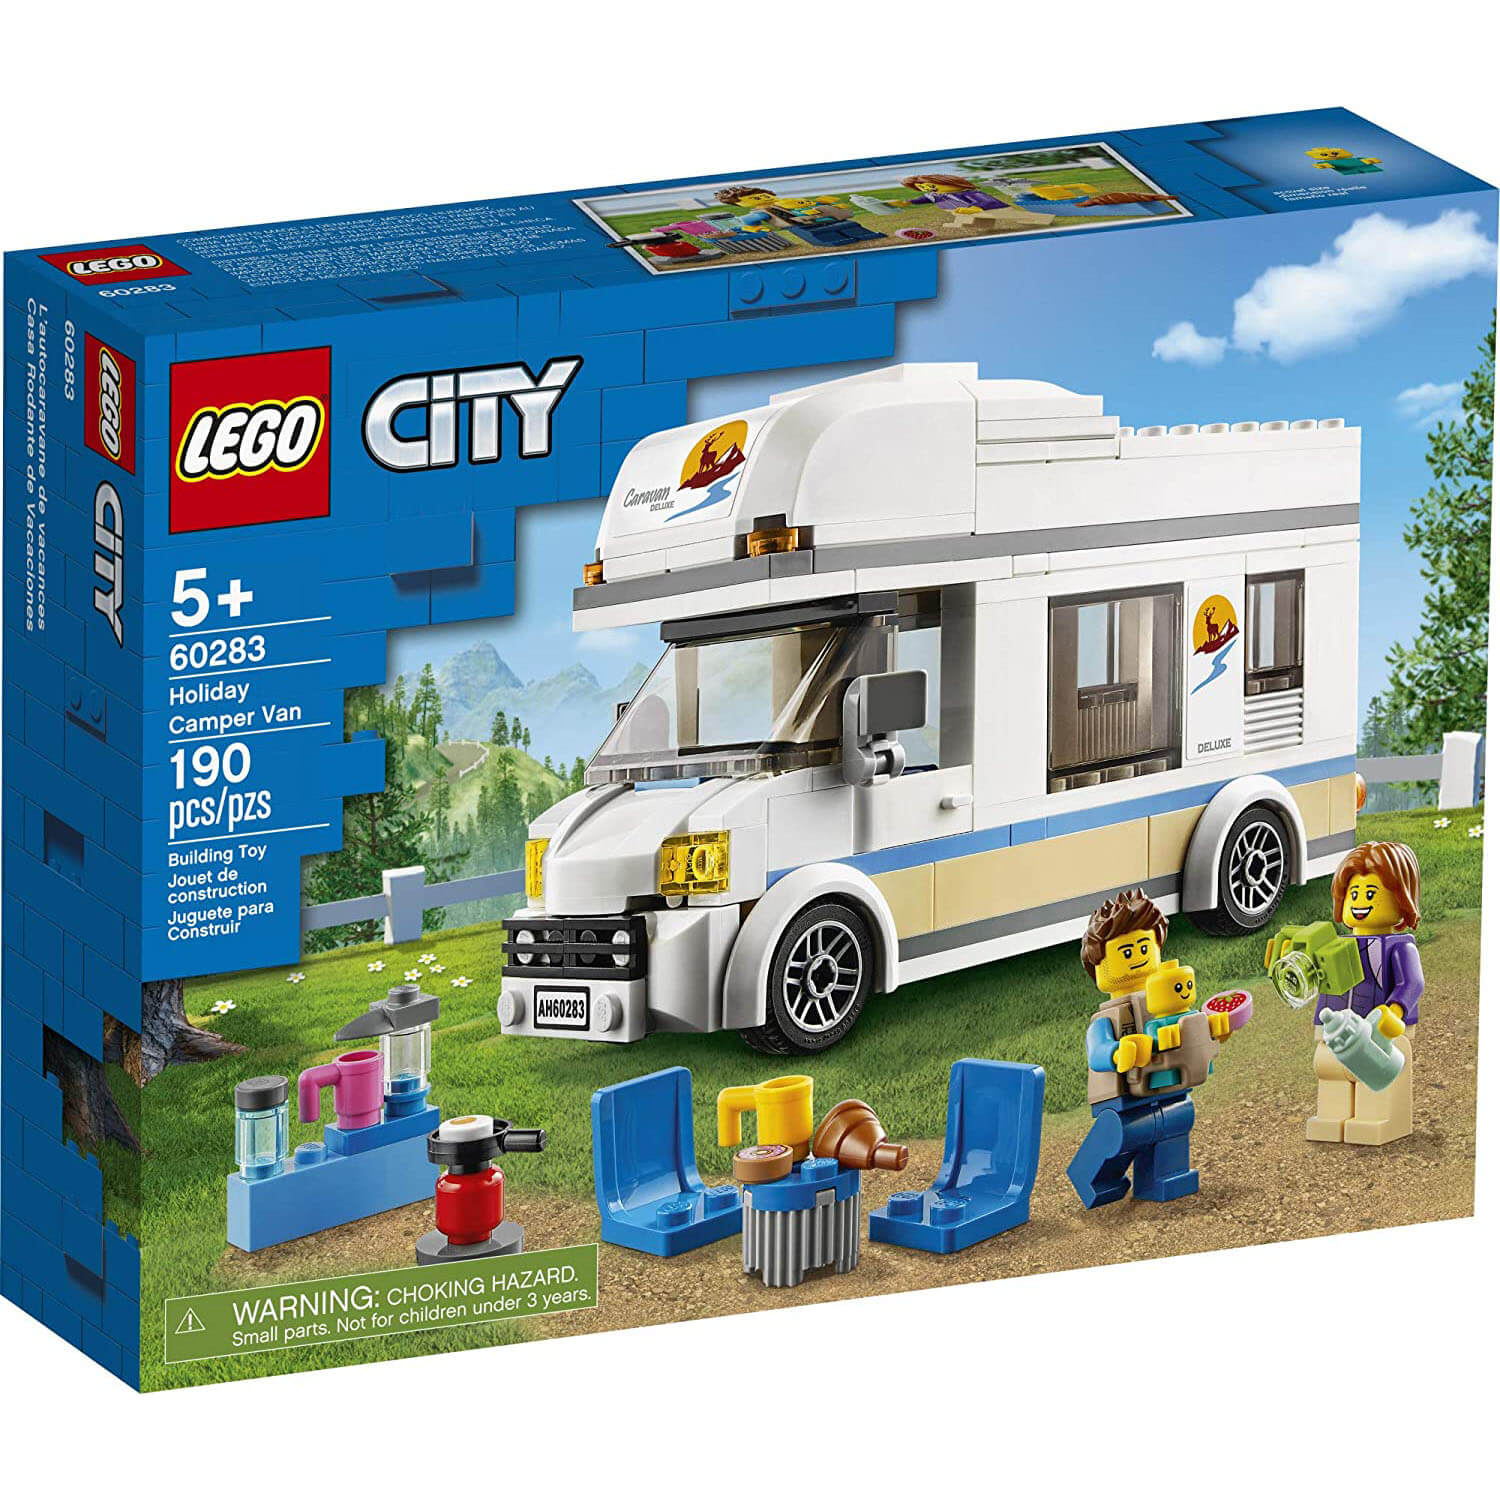 LEGO City Great Vehicles Holiday Camper Van 190 Piece Building Set (60283)